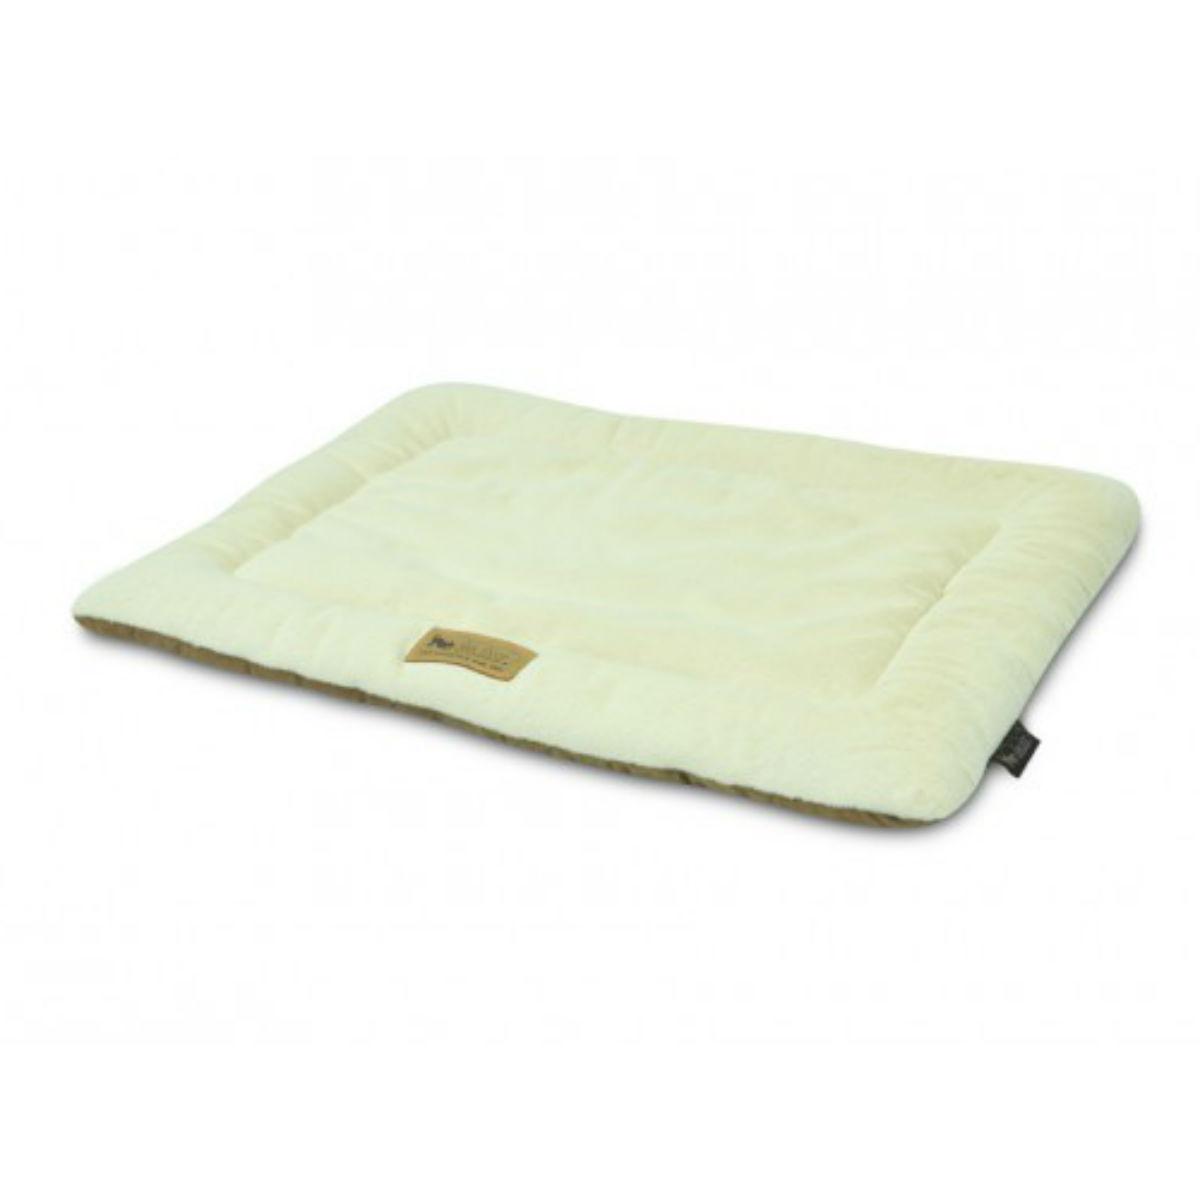 P.L.A.Y. Chill Pad Pet Bed - Cream/Hazelnut